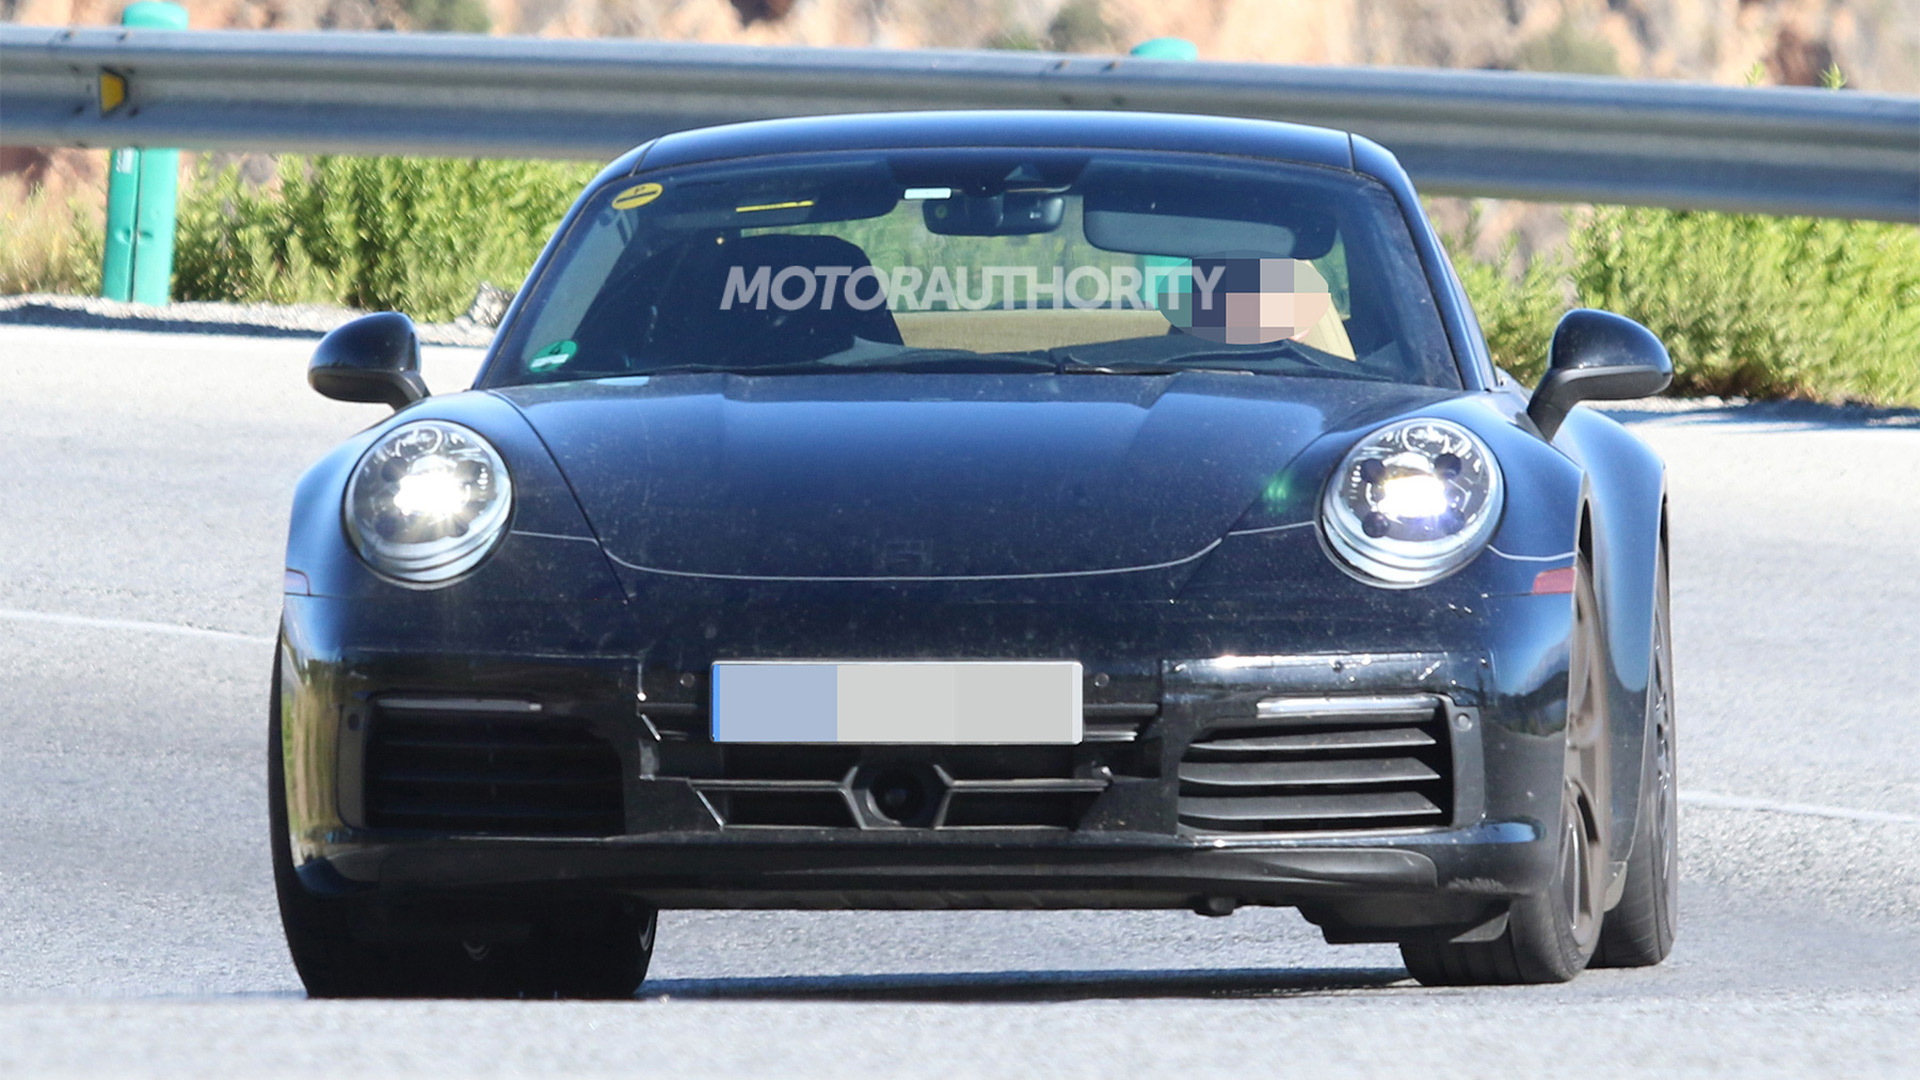 2020 Porsche 911 spy shots - Image via S. Baldauf/SB-Medien